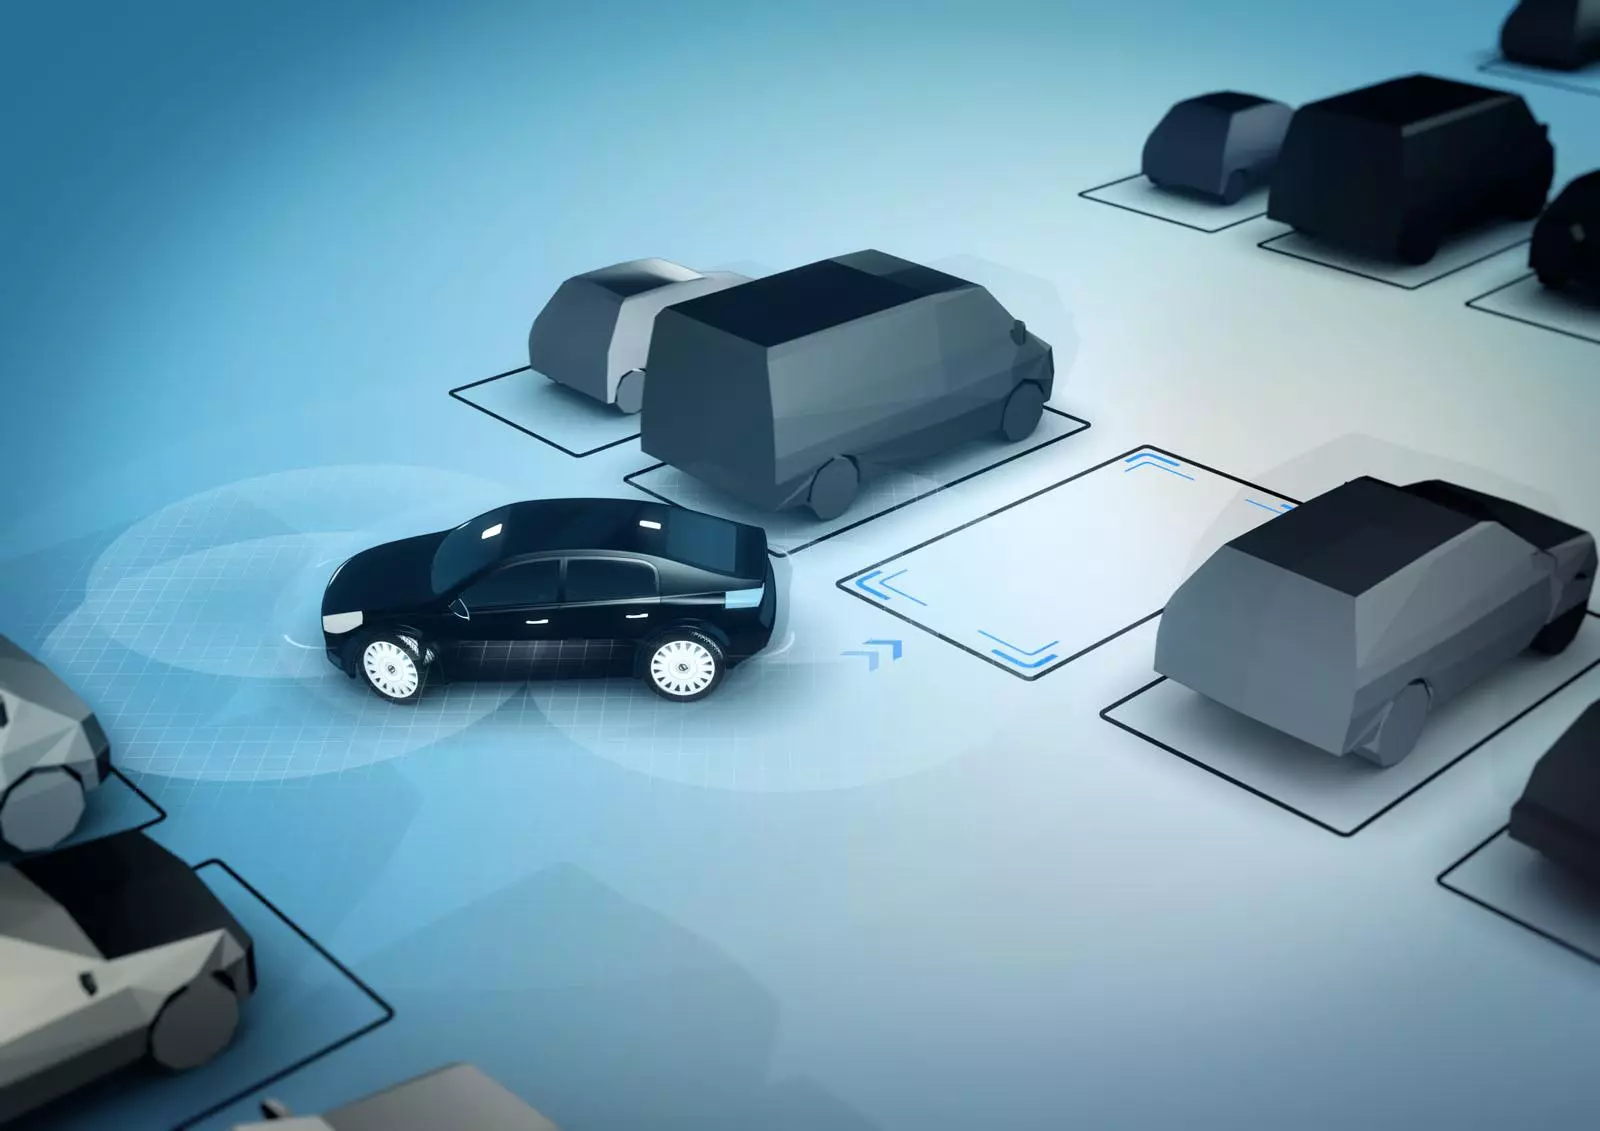 Volvo yntrodusearret autonoom parkearsysteem | Auto Ledger 27489_4